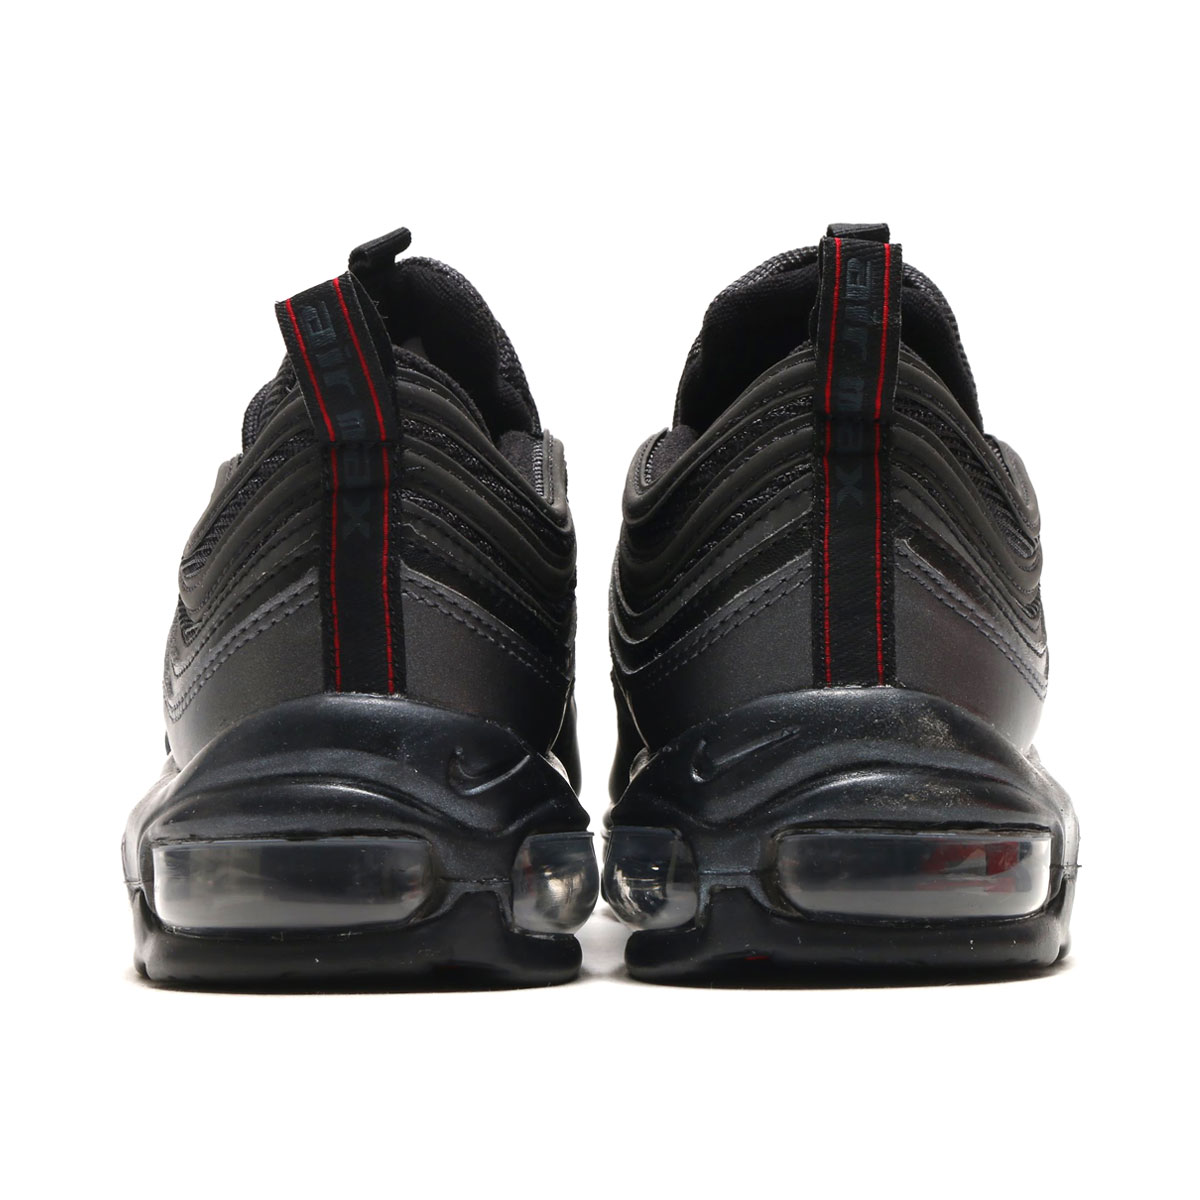 giay-nike-AIR-MAX-97-Metallic-Hematite-nam-chinh-hang-tphcm-921826-005-king-shoes-sneaker-tan-binh